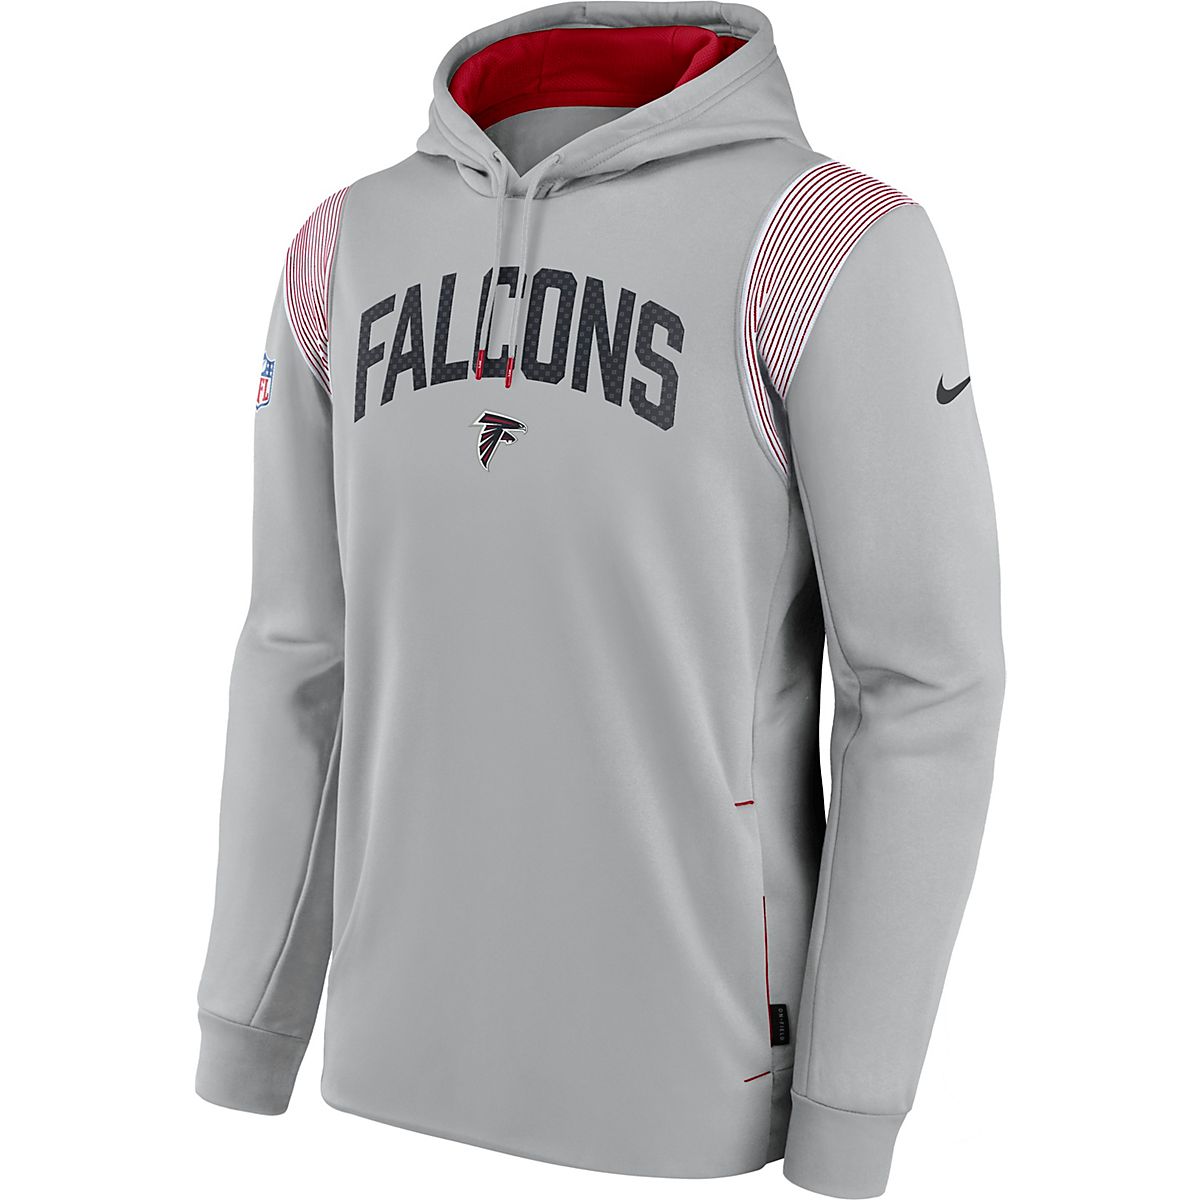 Georgia sports teams Falcons Bulldogs Braves Hawks shirt, hoodie